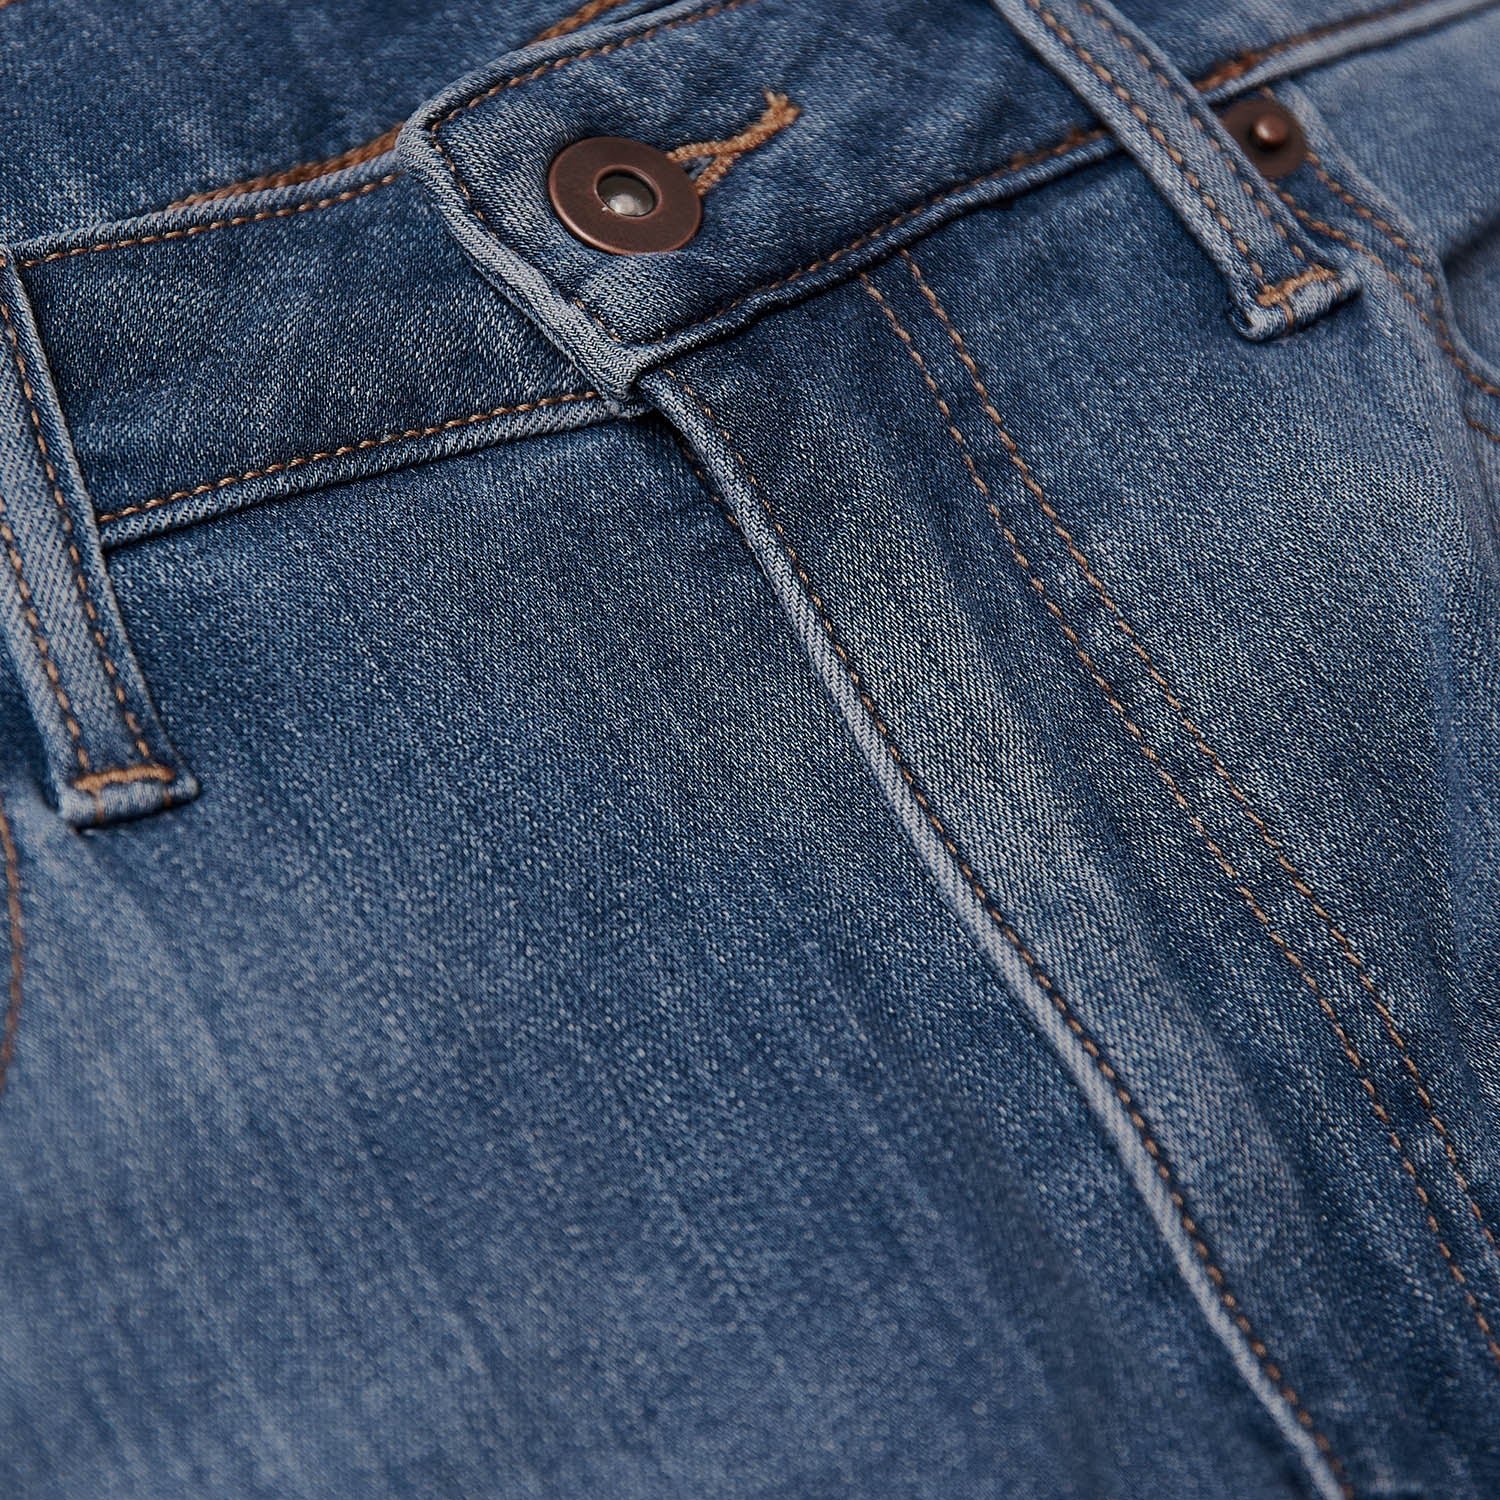 Medium indigo Wash Straight Fit Comfort Jeans